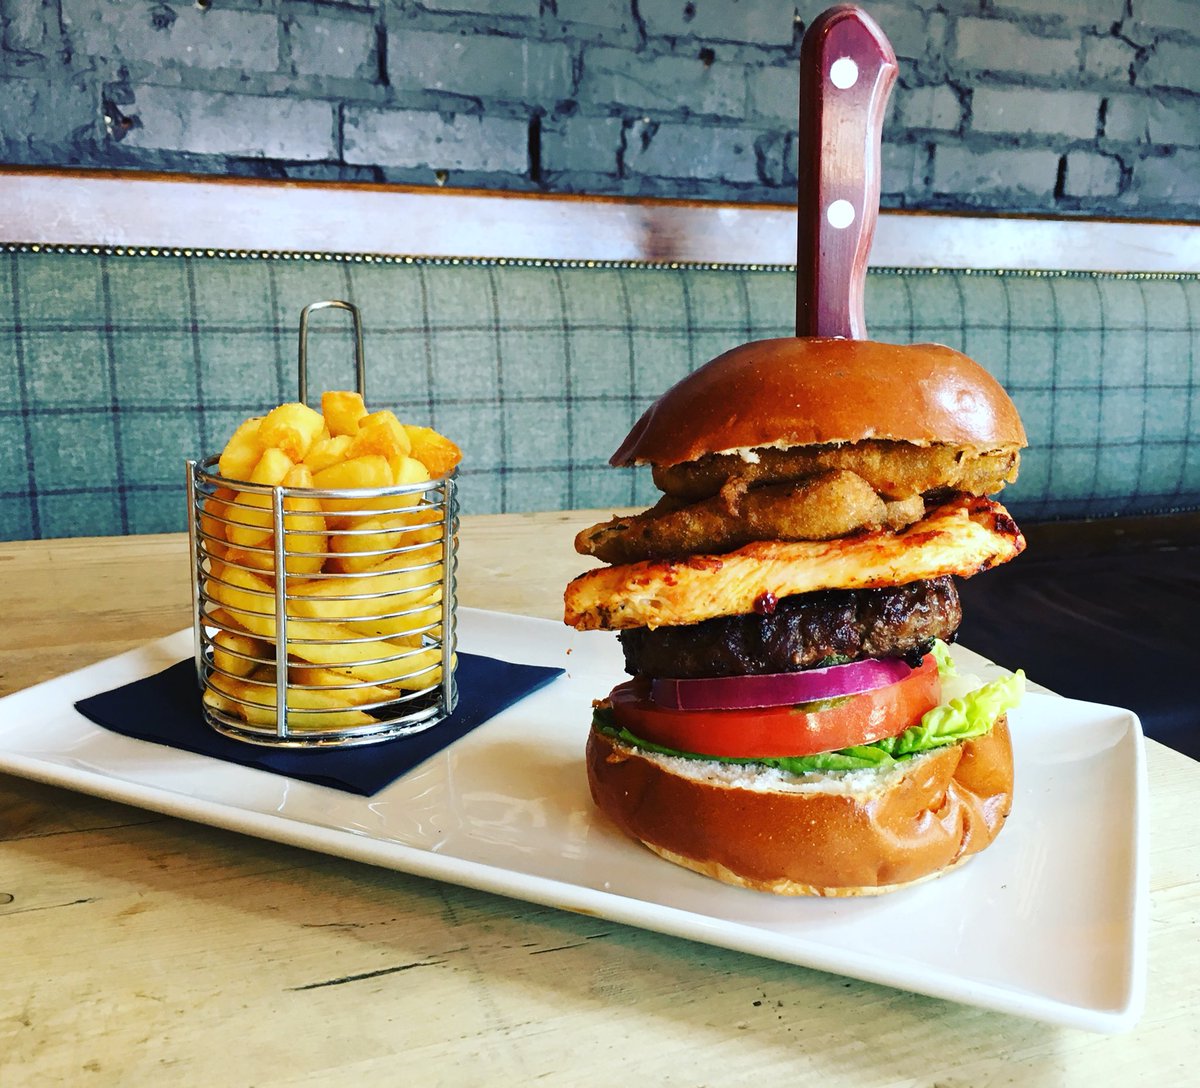 New #burgeroftheweek - Chalcroft Beef Patty, Harissa Chicken, #craftbeer battered pickles! 🍔🤤 #southsea #foodgasm #burger #meatlover #albertroad #foodporn